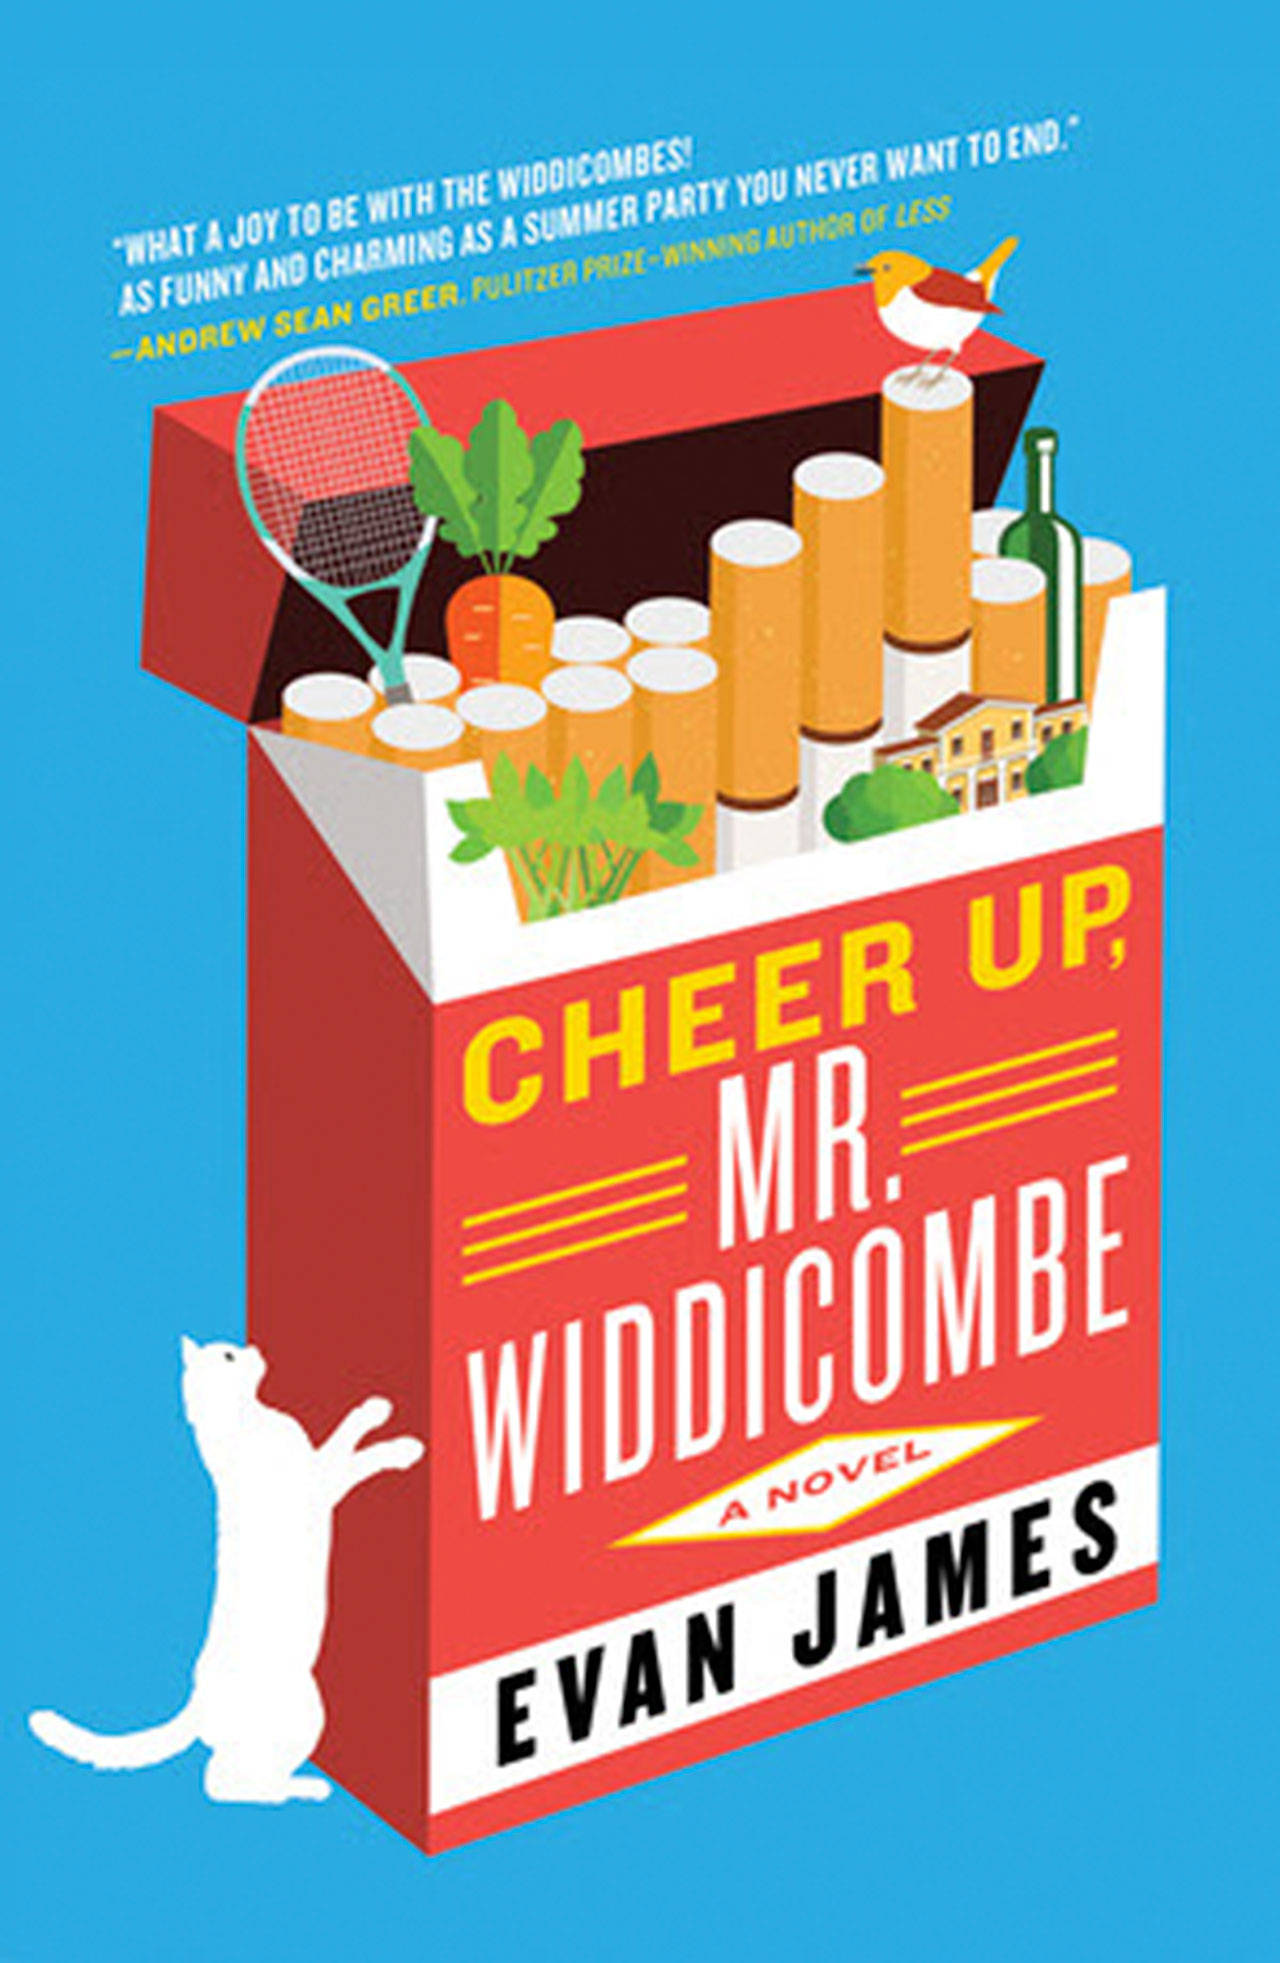 Image courtesy of Eagle Harbor Book Company | Evan James’ satirical comedy novel “Cheer Up, Mr. Widdicombe” is set on Bainbridge Island.